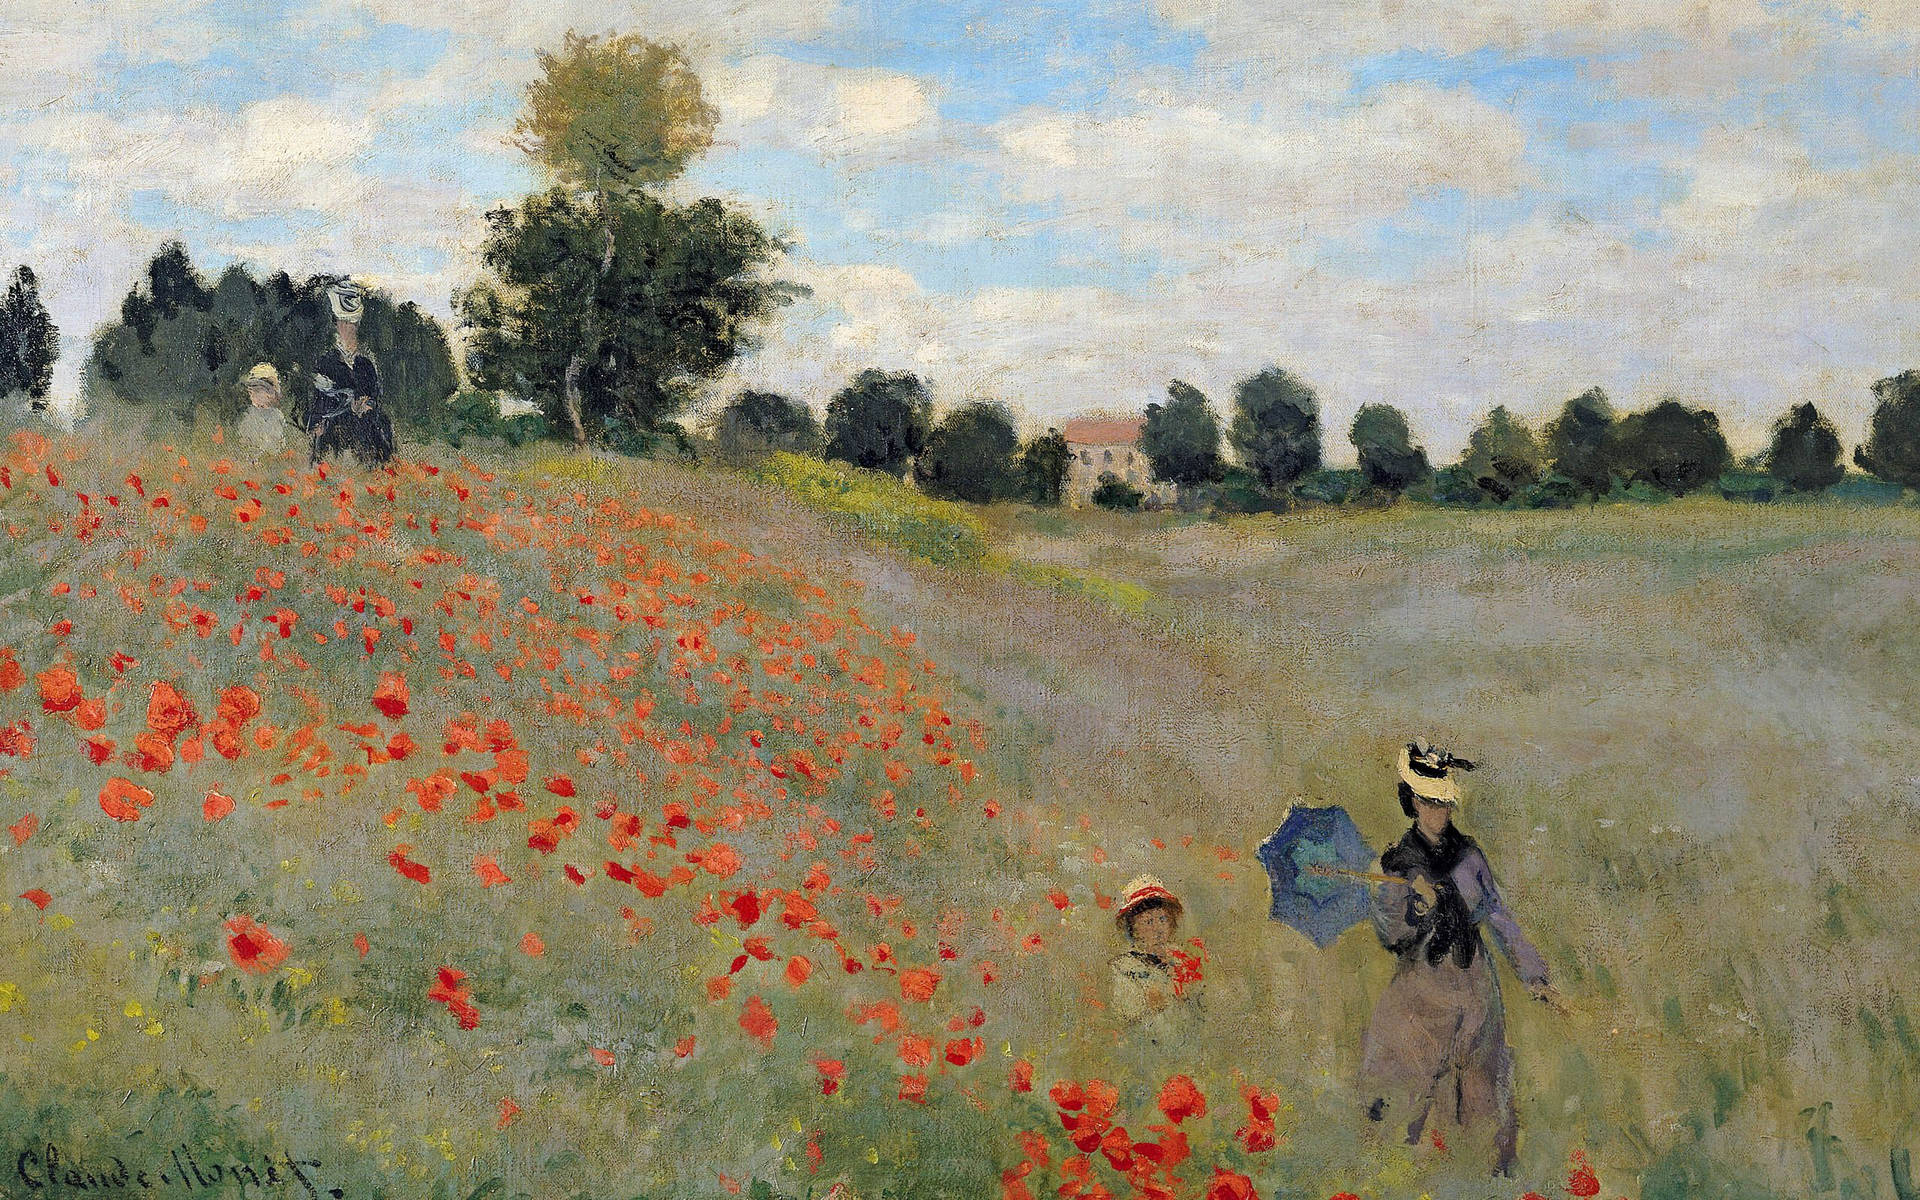 Caption: Renoir’s Masterpiece - Women on the Field Wallpaper